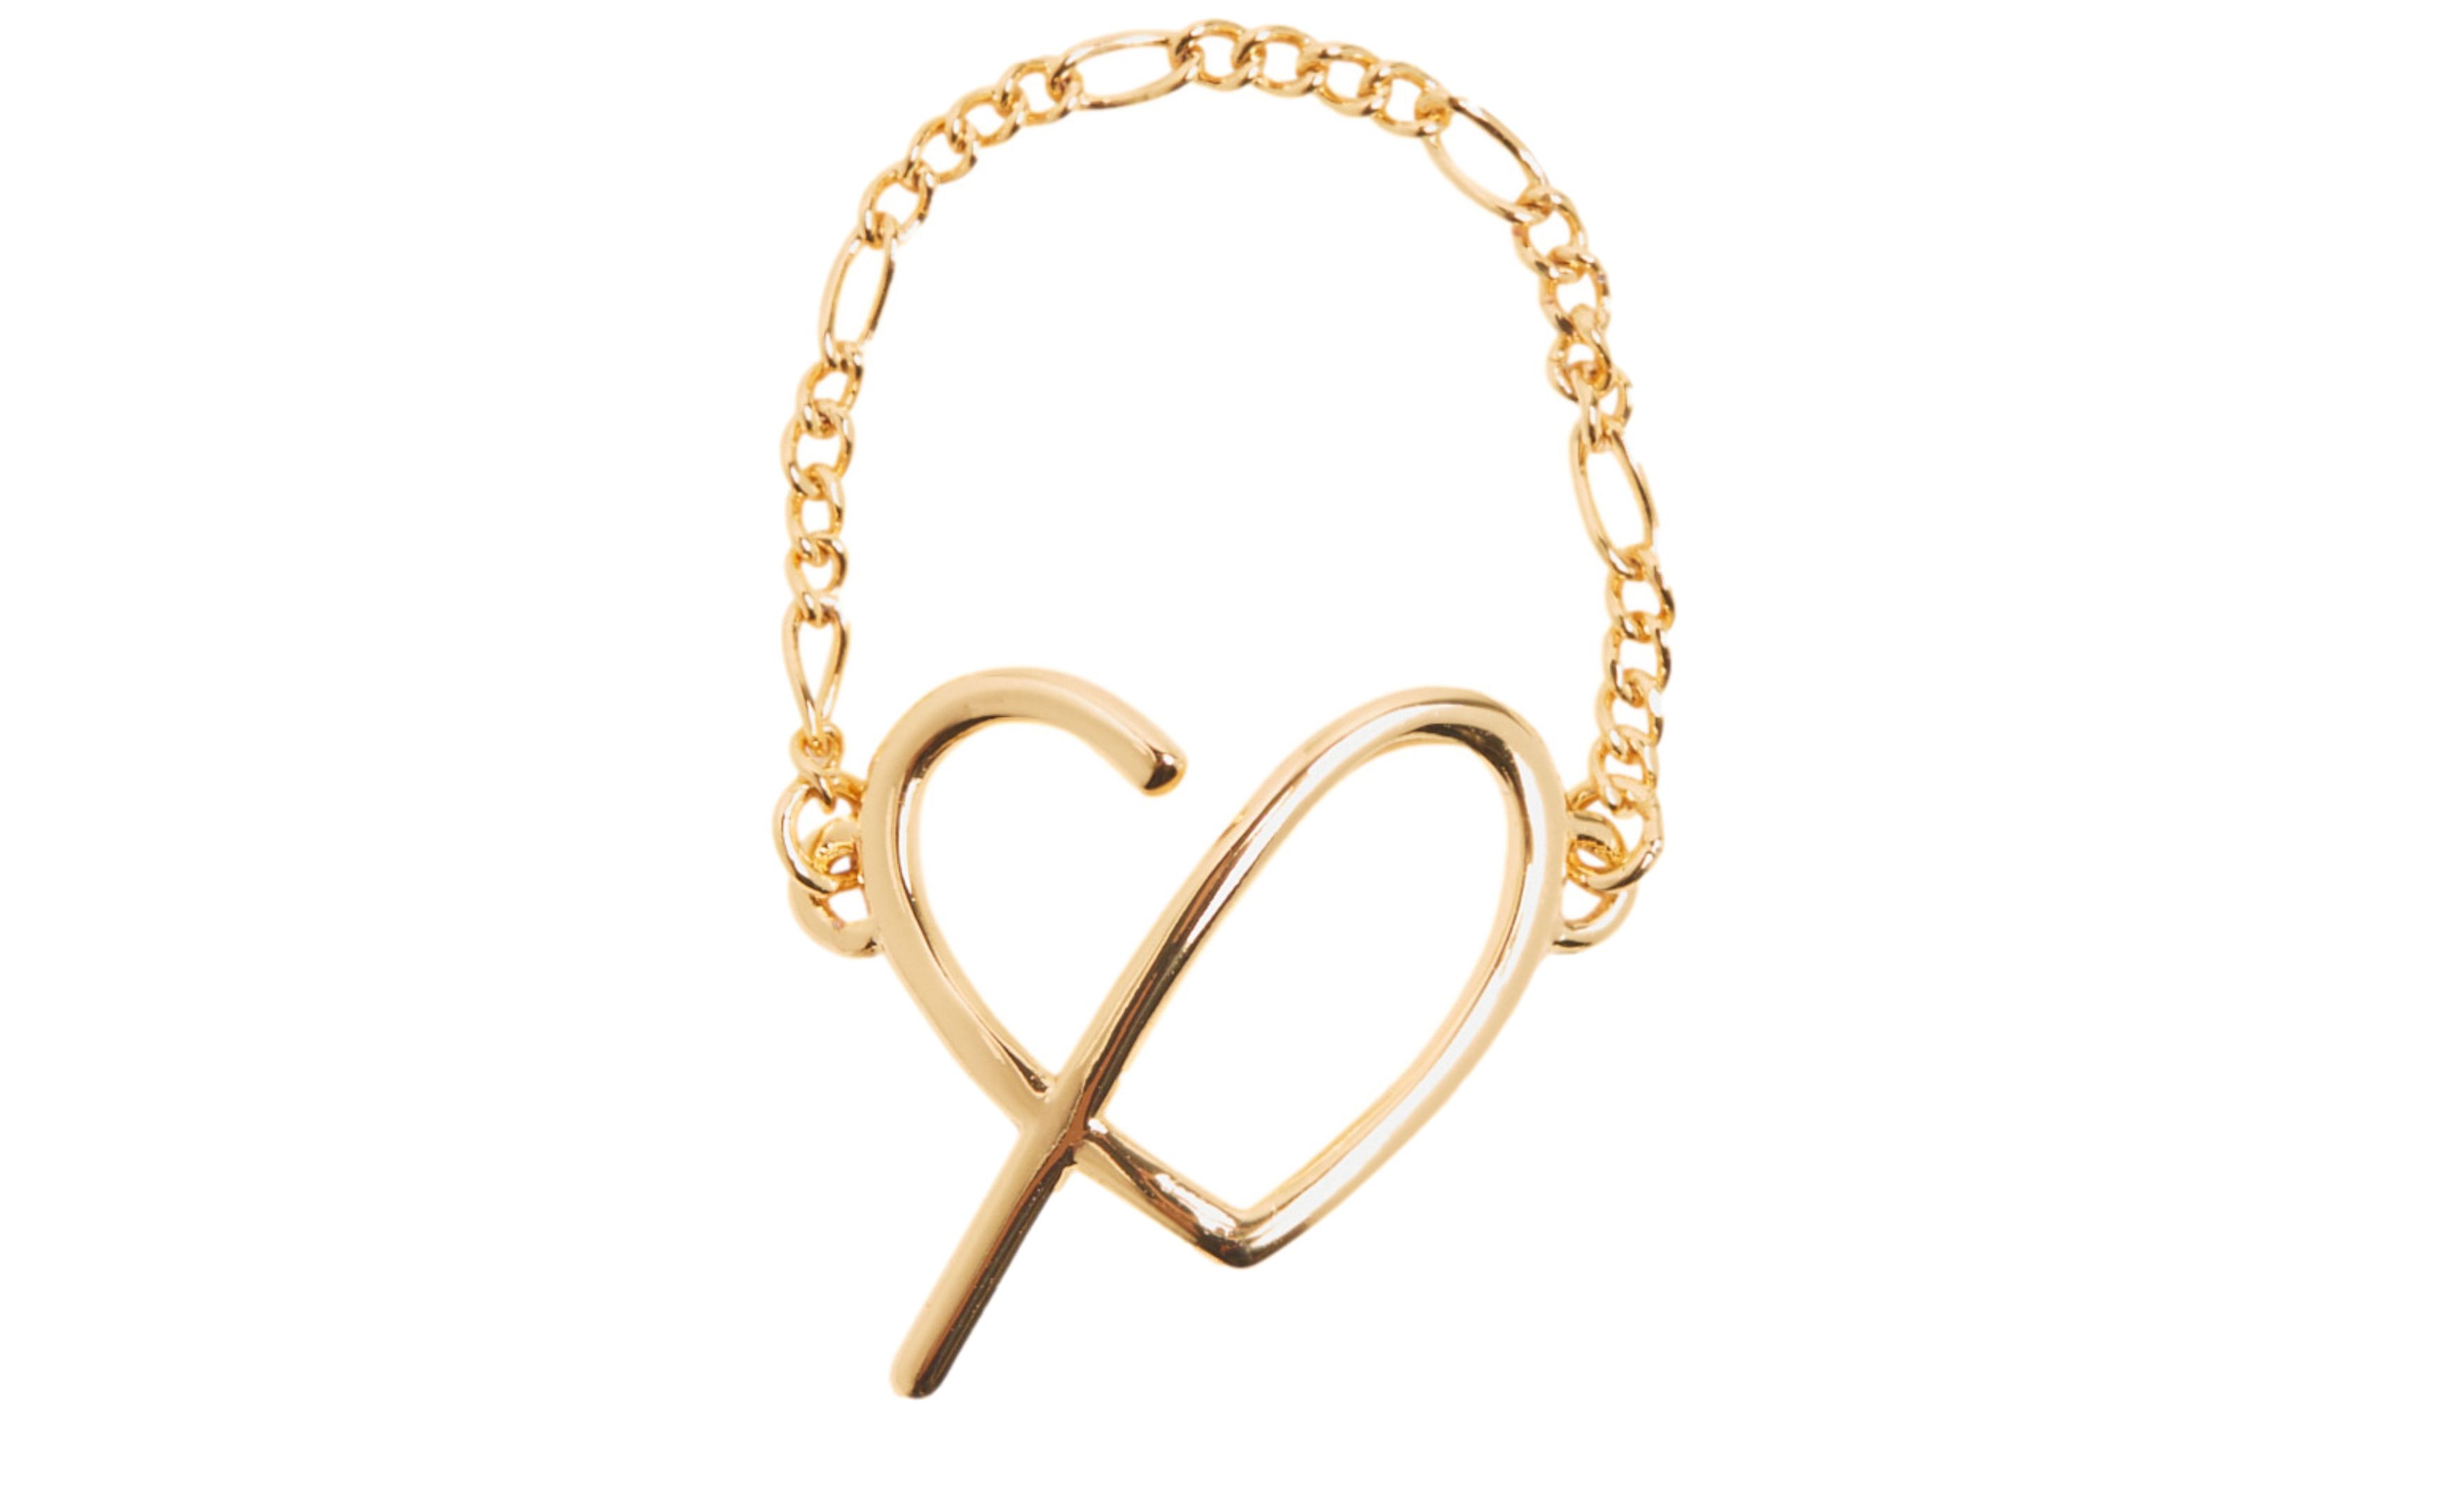  Golden CP heart chain ring